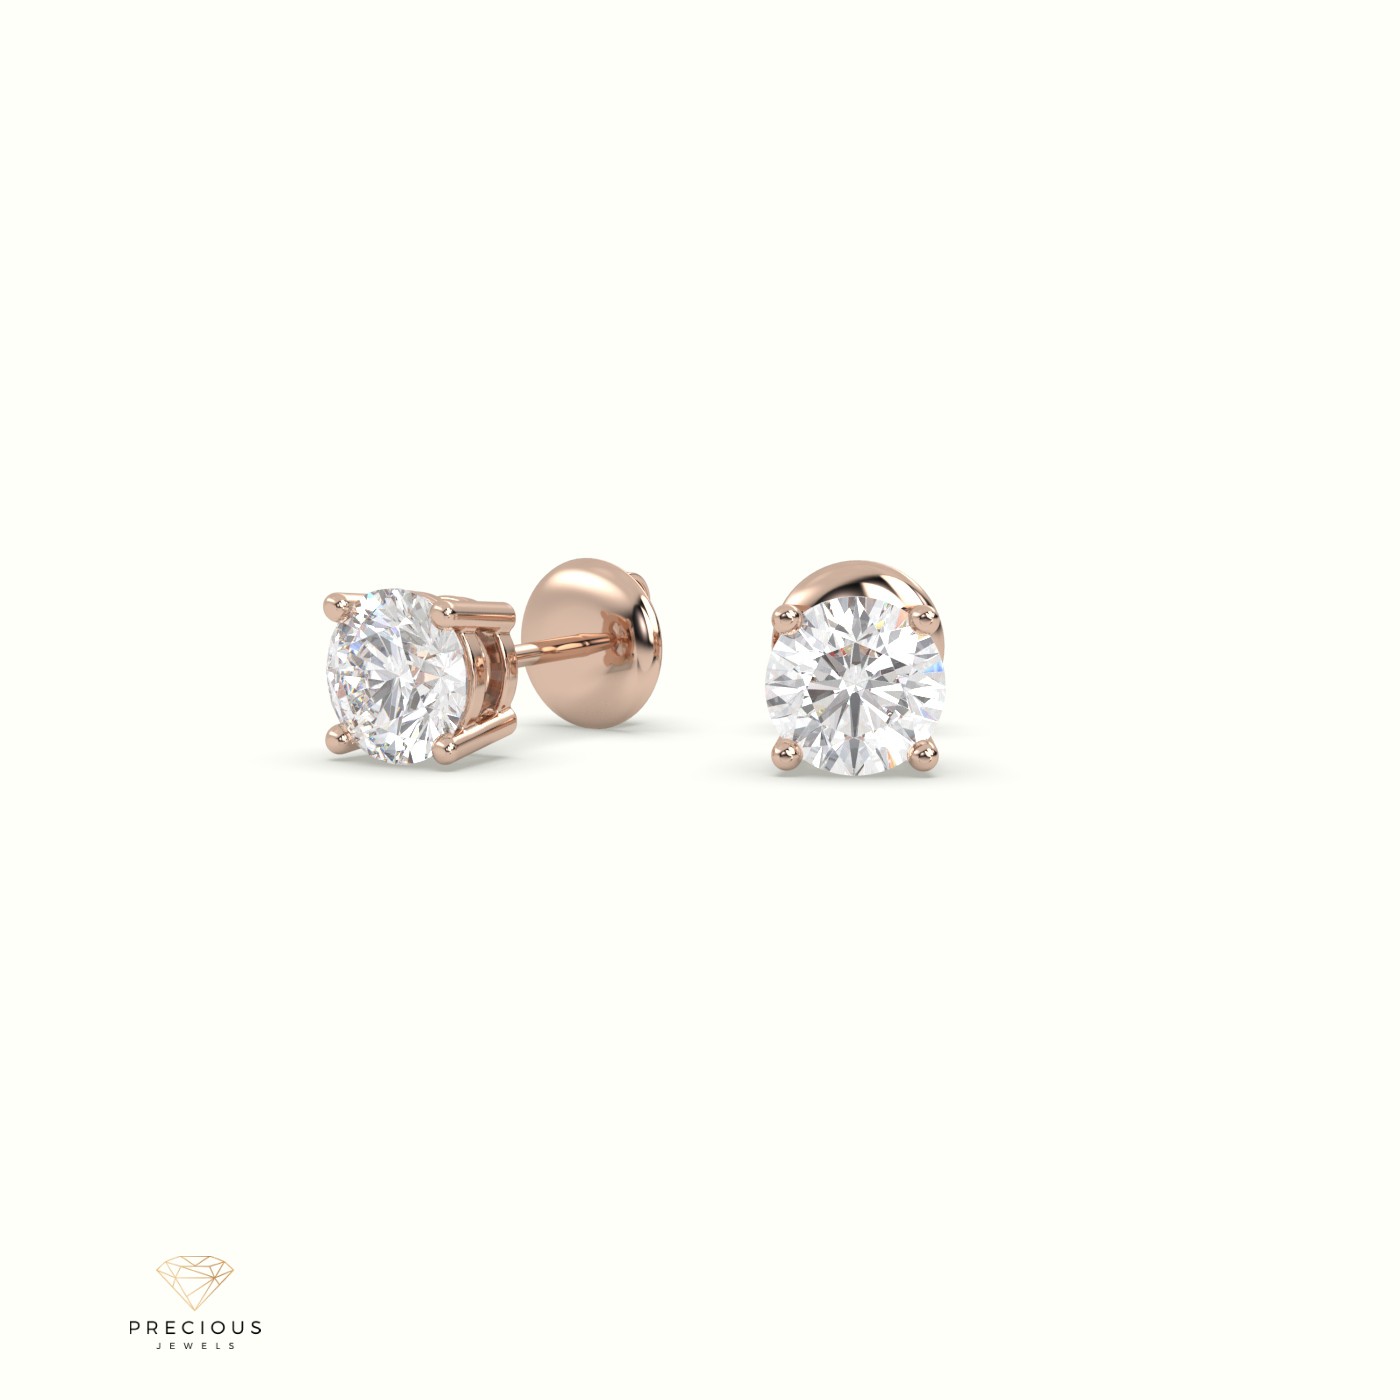 18k rose gold 4 prongs classic round diamond earring studs